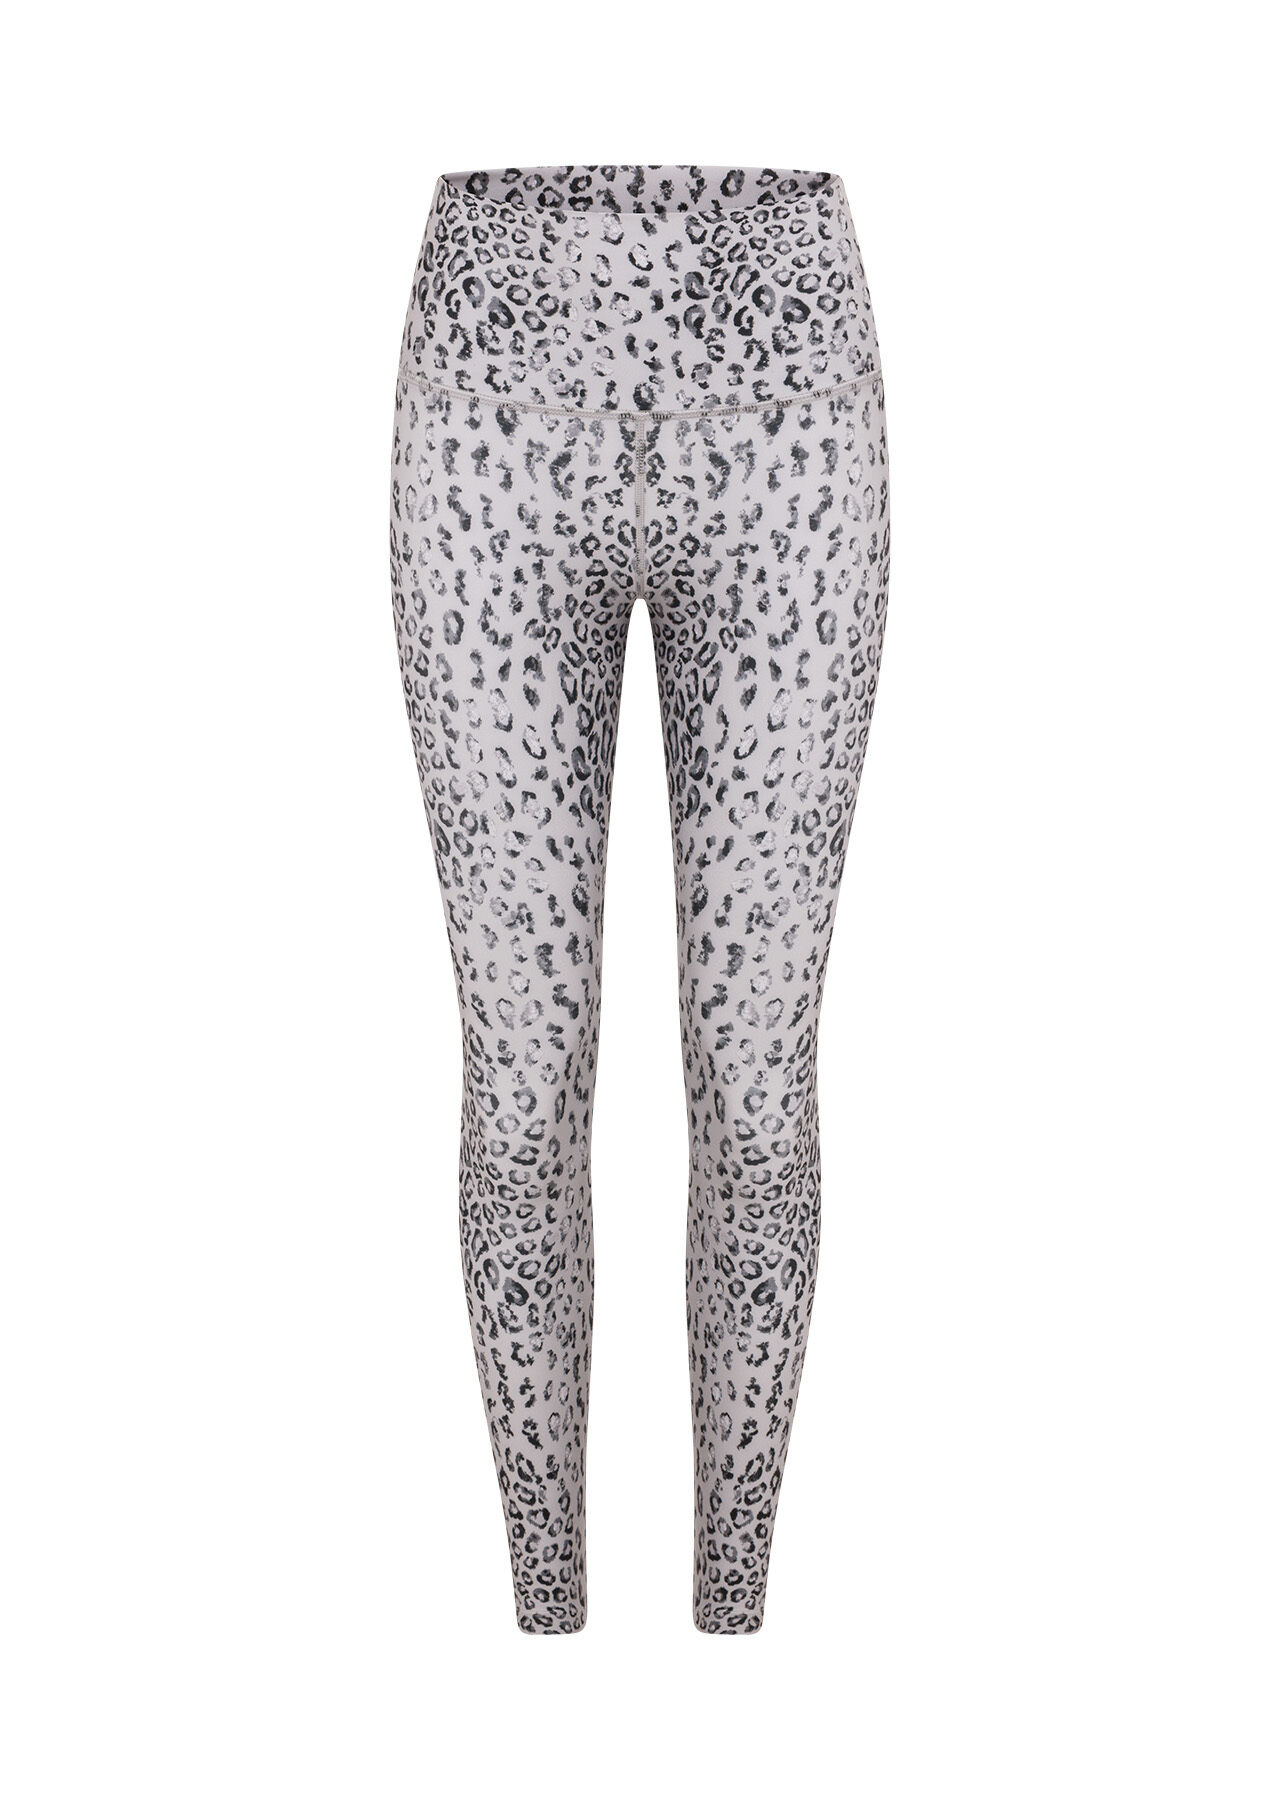 Black and White Leopard half Black Half Leopard Print Leggings, Yoga Pants,  Exercise, Workout, leggings — THE ZEBRA LADY